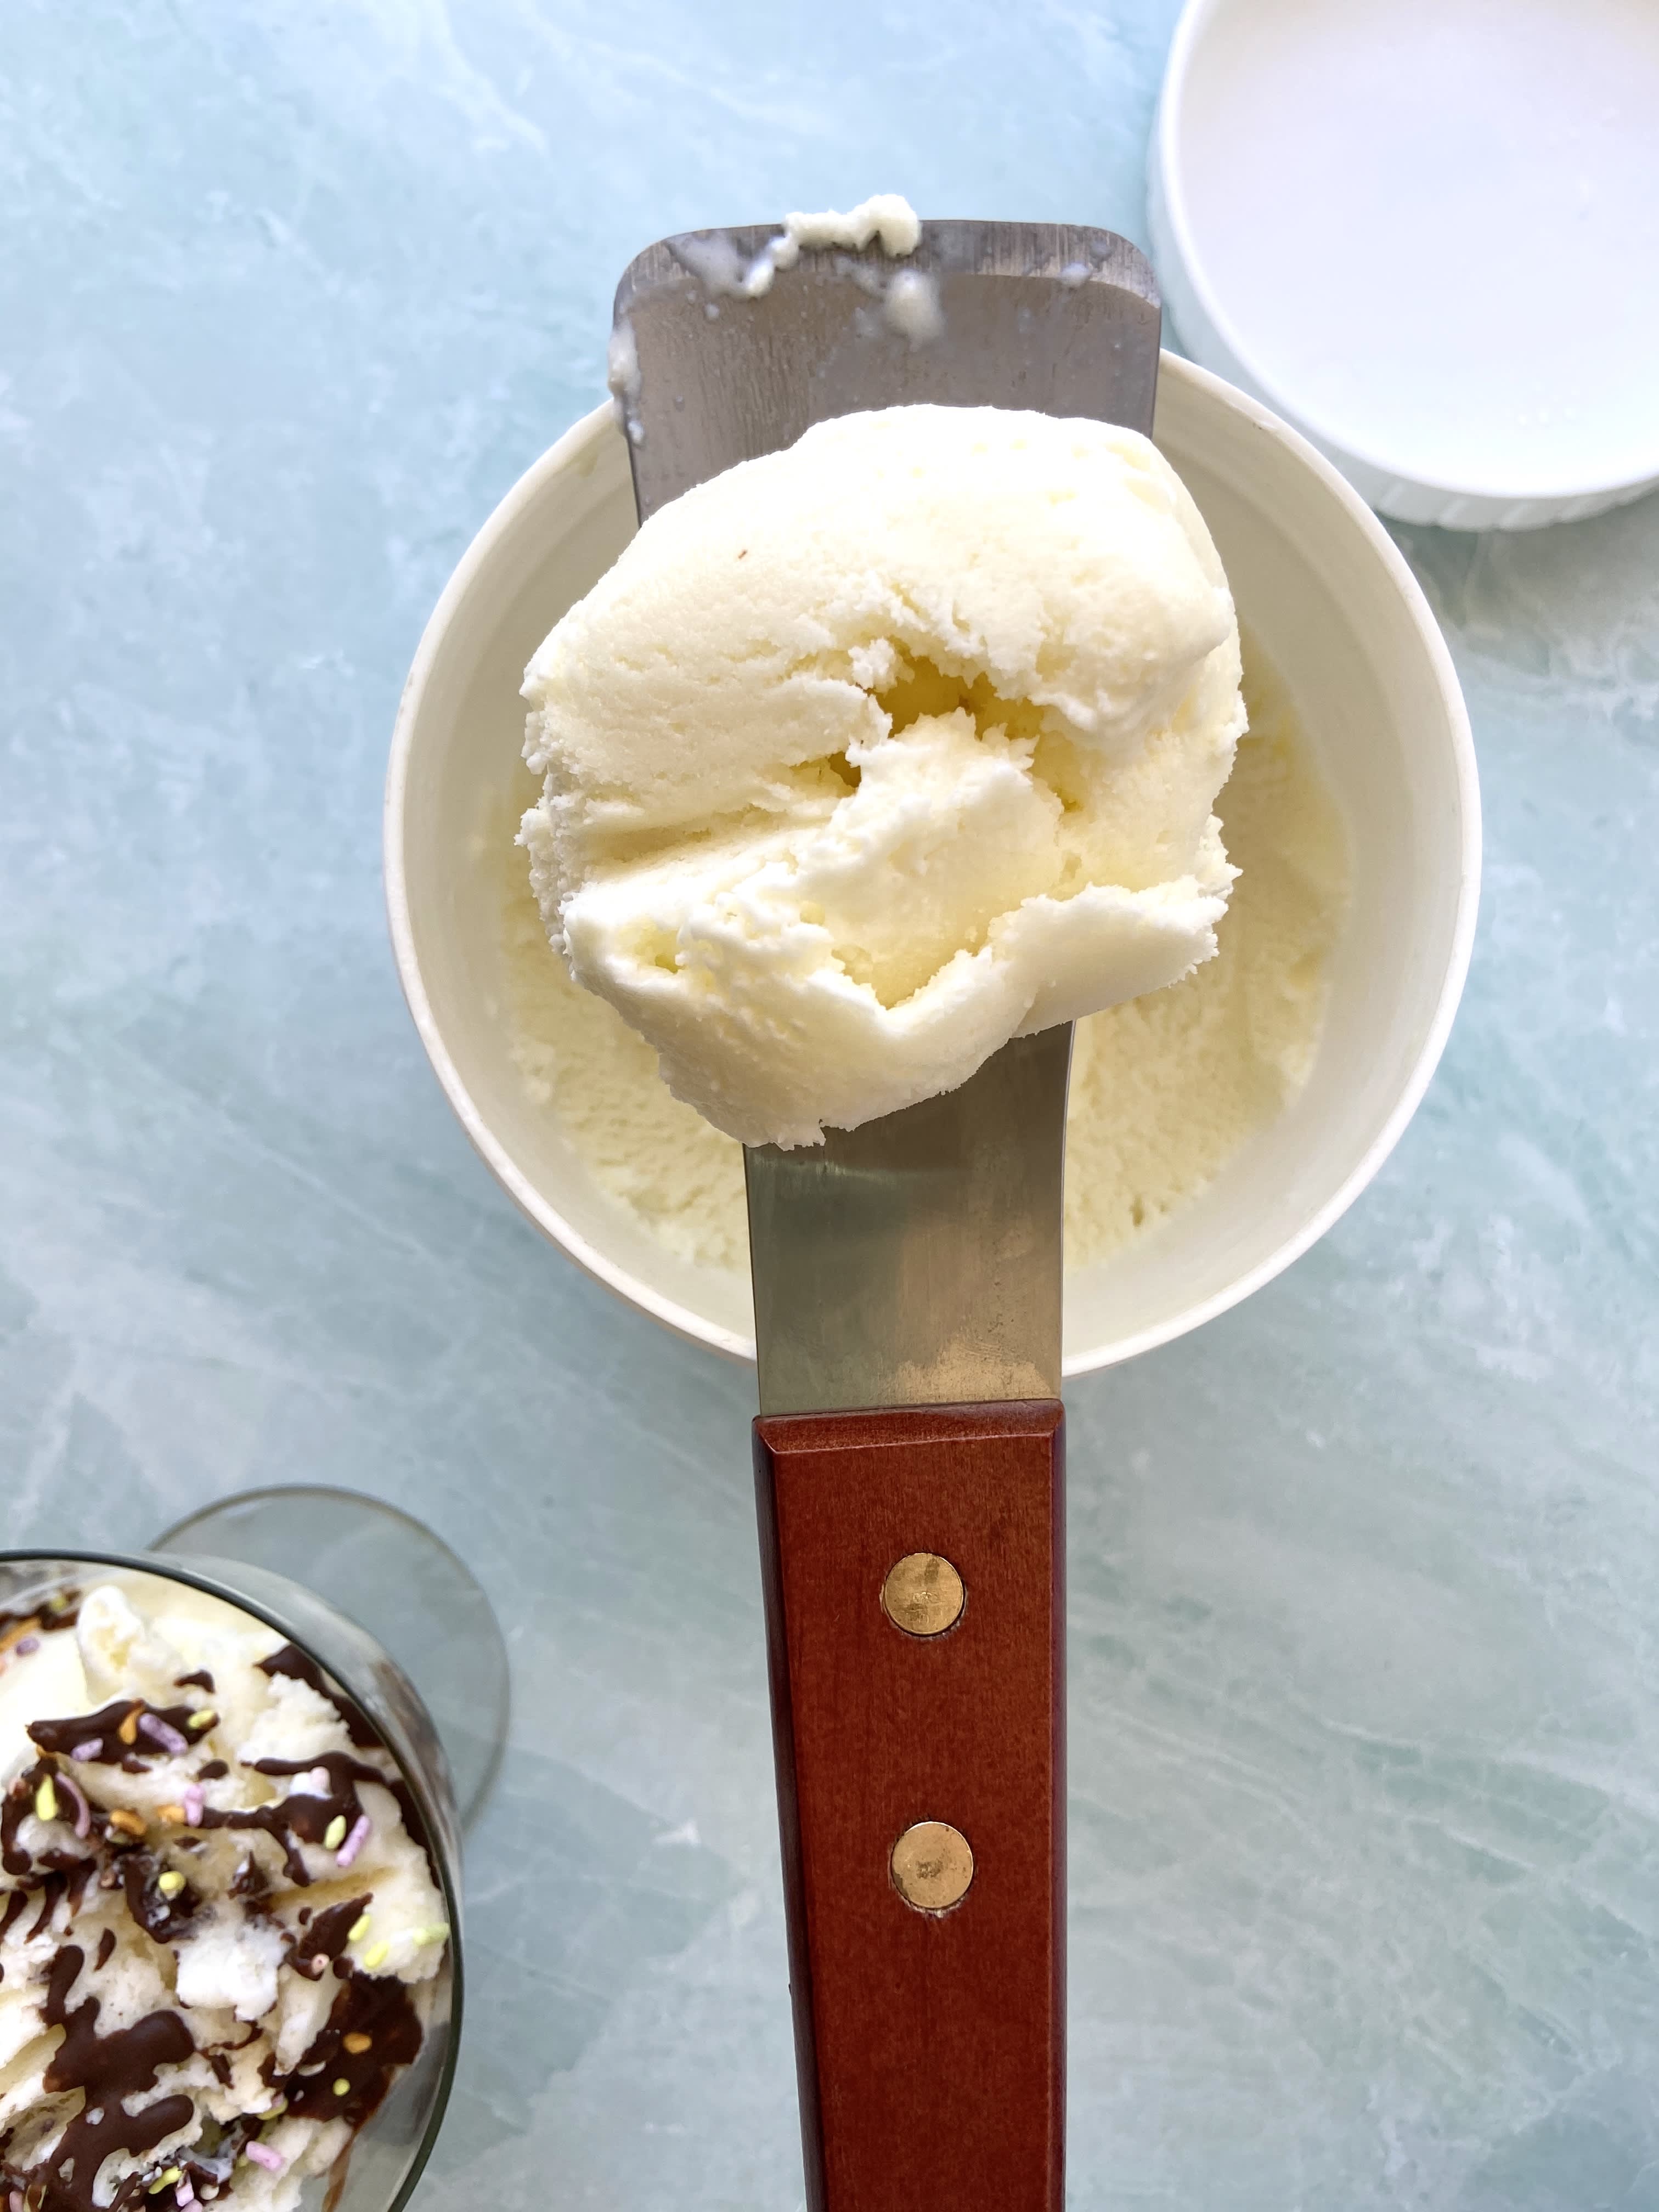 s Best-Selling Ice Cream Scoop Is Just $10